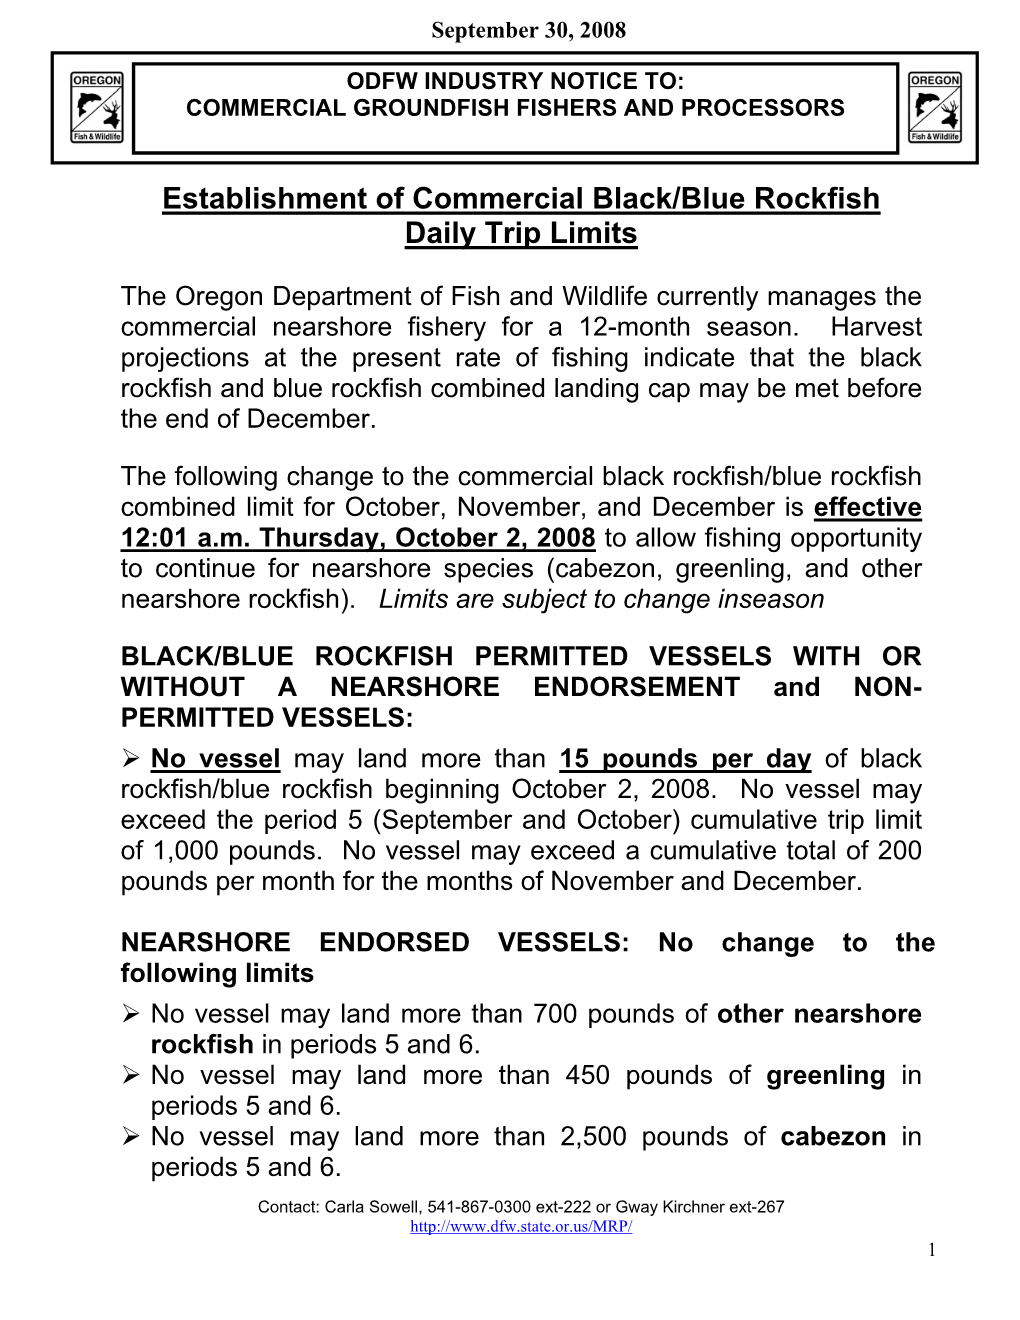 Establishment of Commercial Black/Blue Rockfish Daily Trip Limits